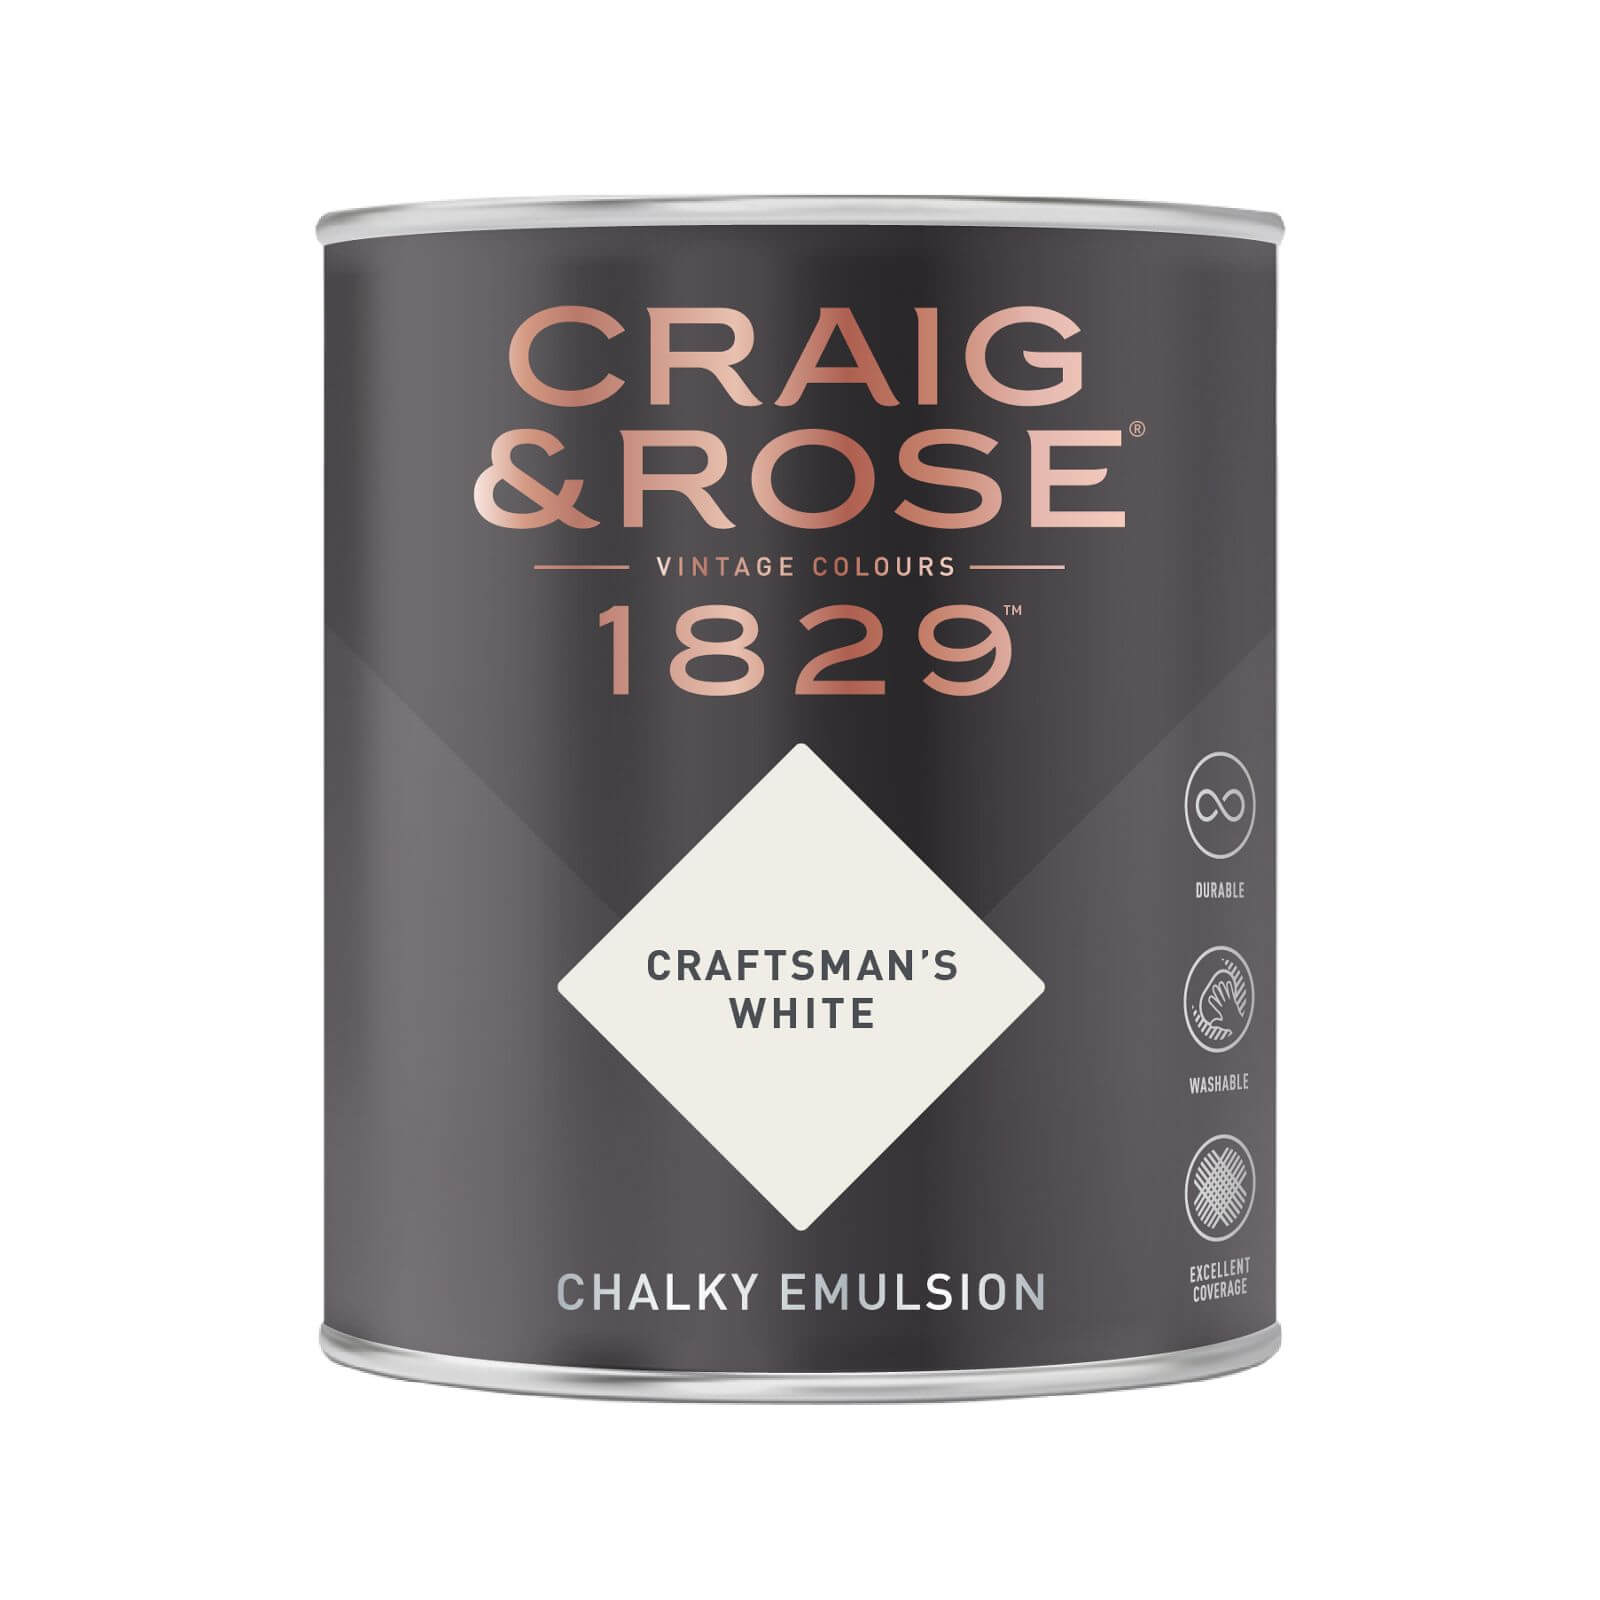 Craig & Rose 1829 Chalky Emulsion Paint Craftsmans White - 750ml